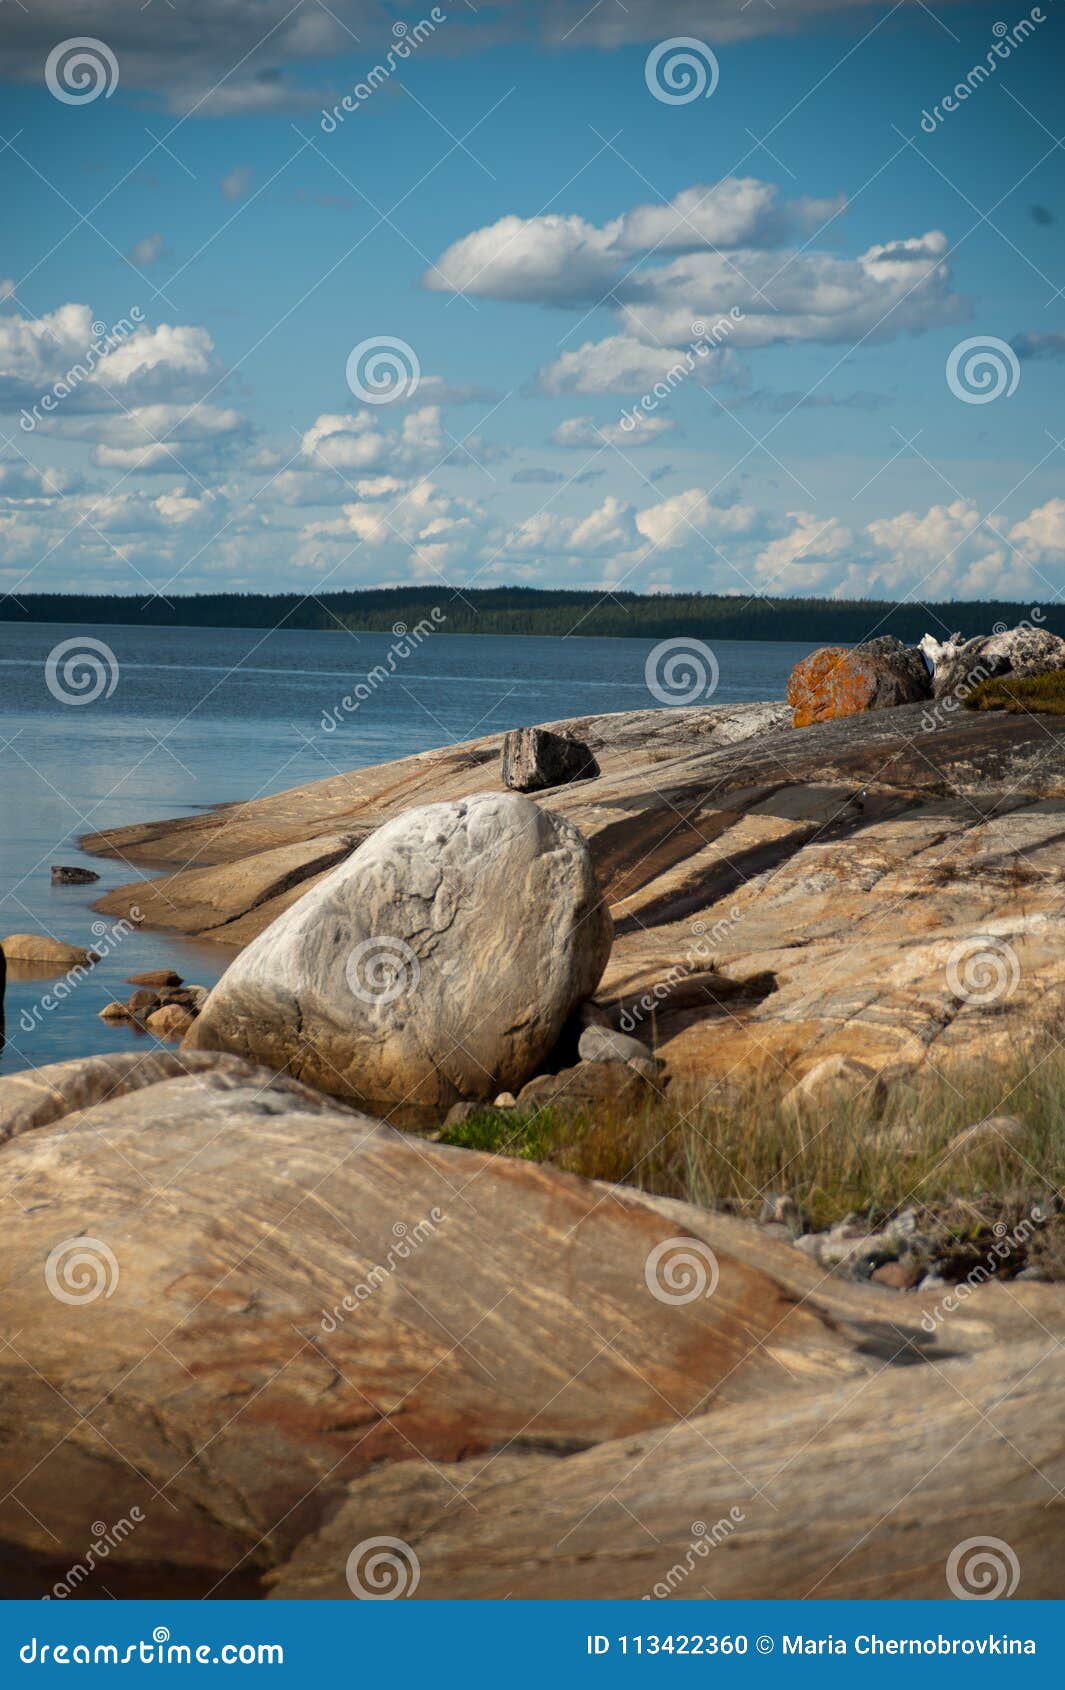 stony litoral